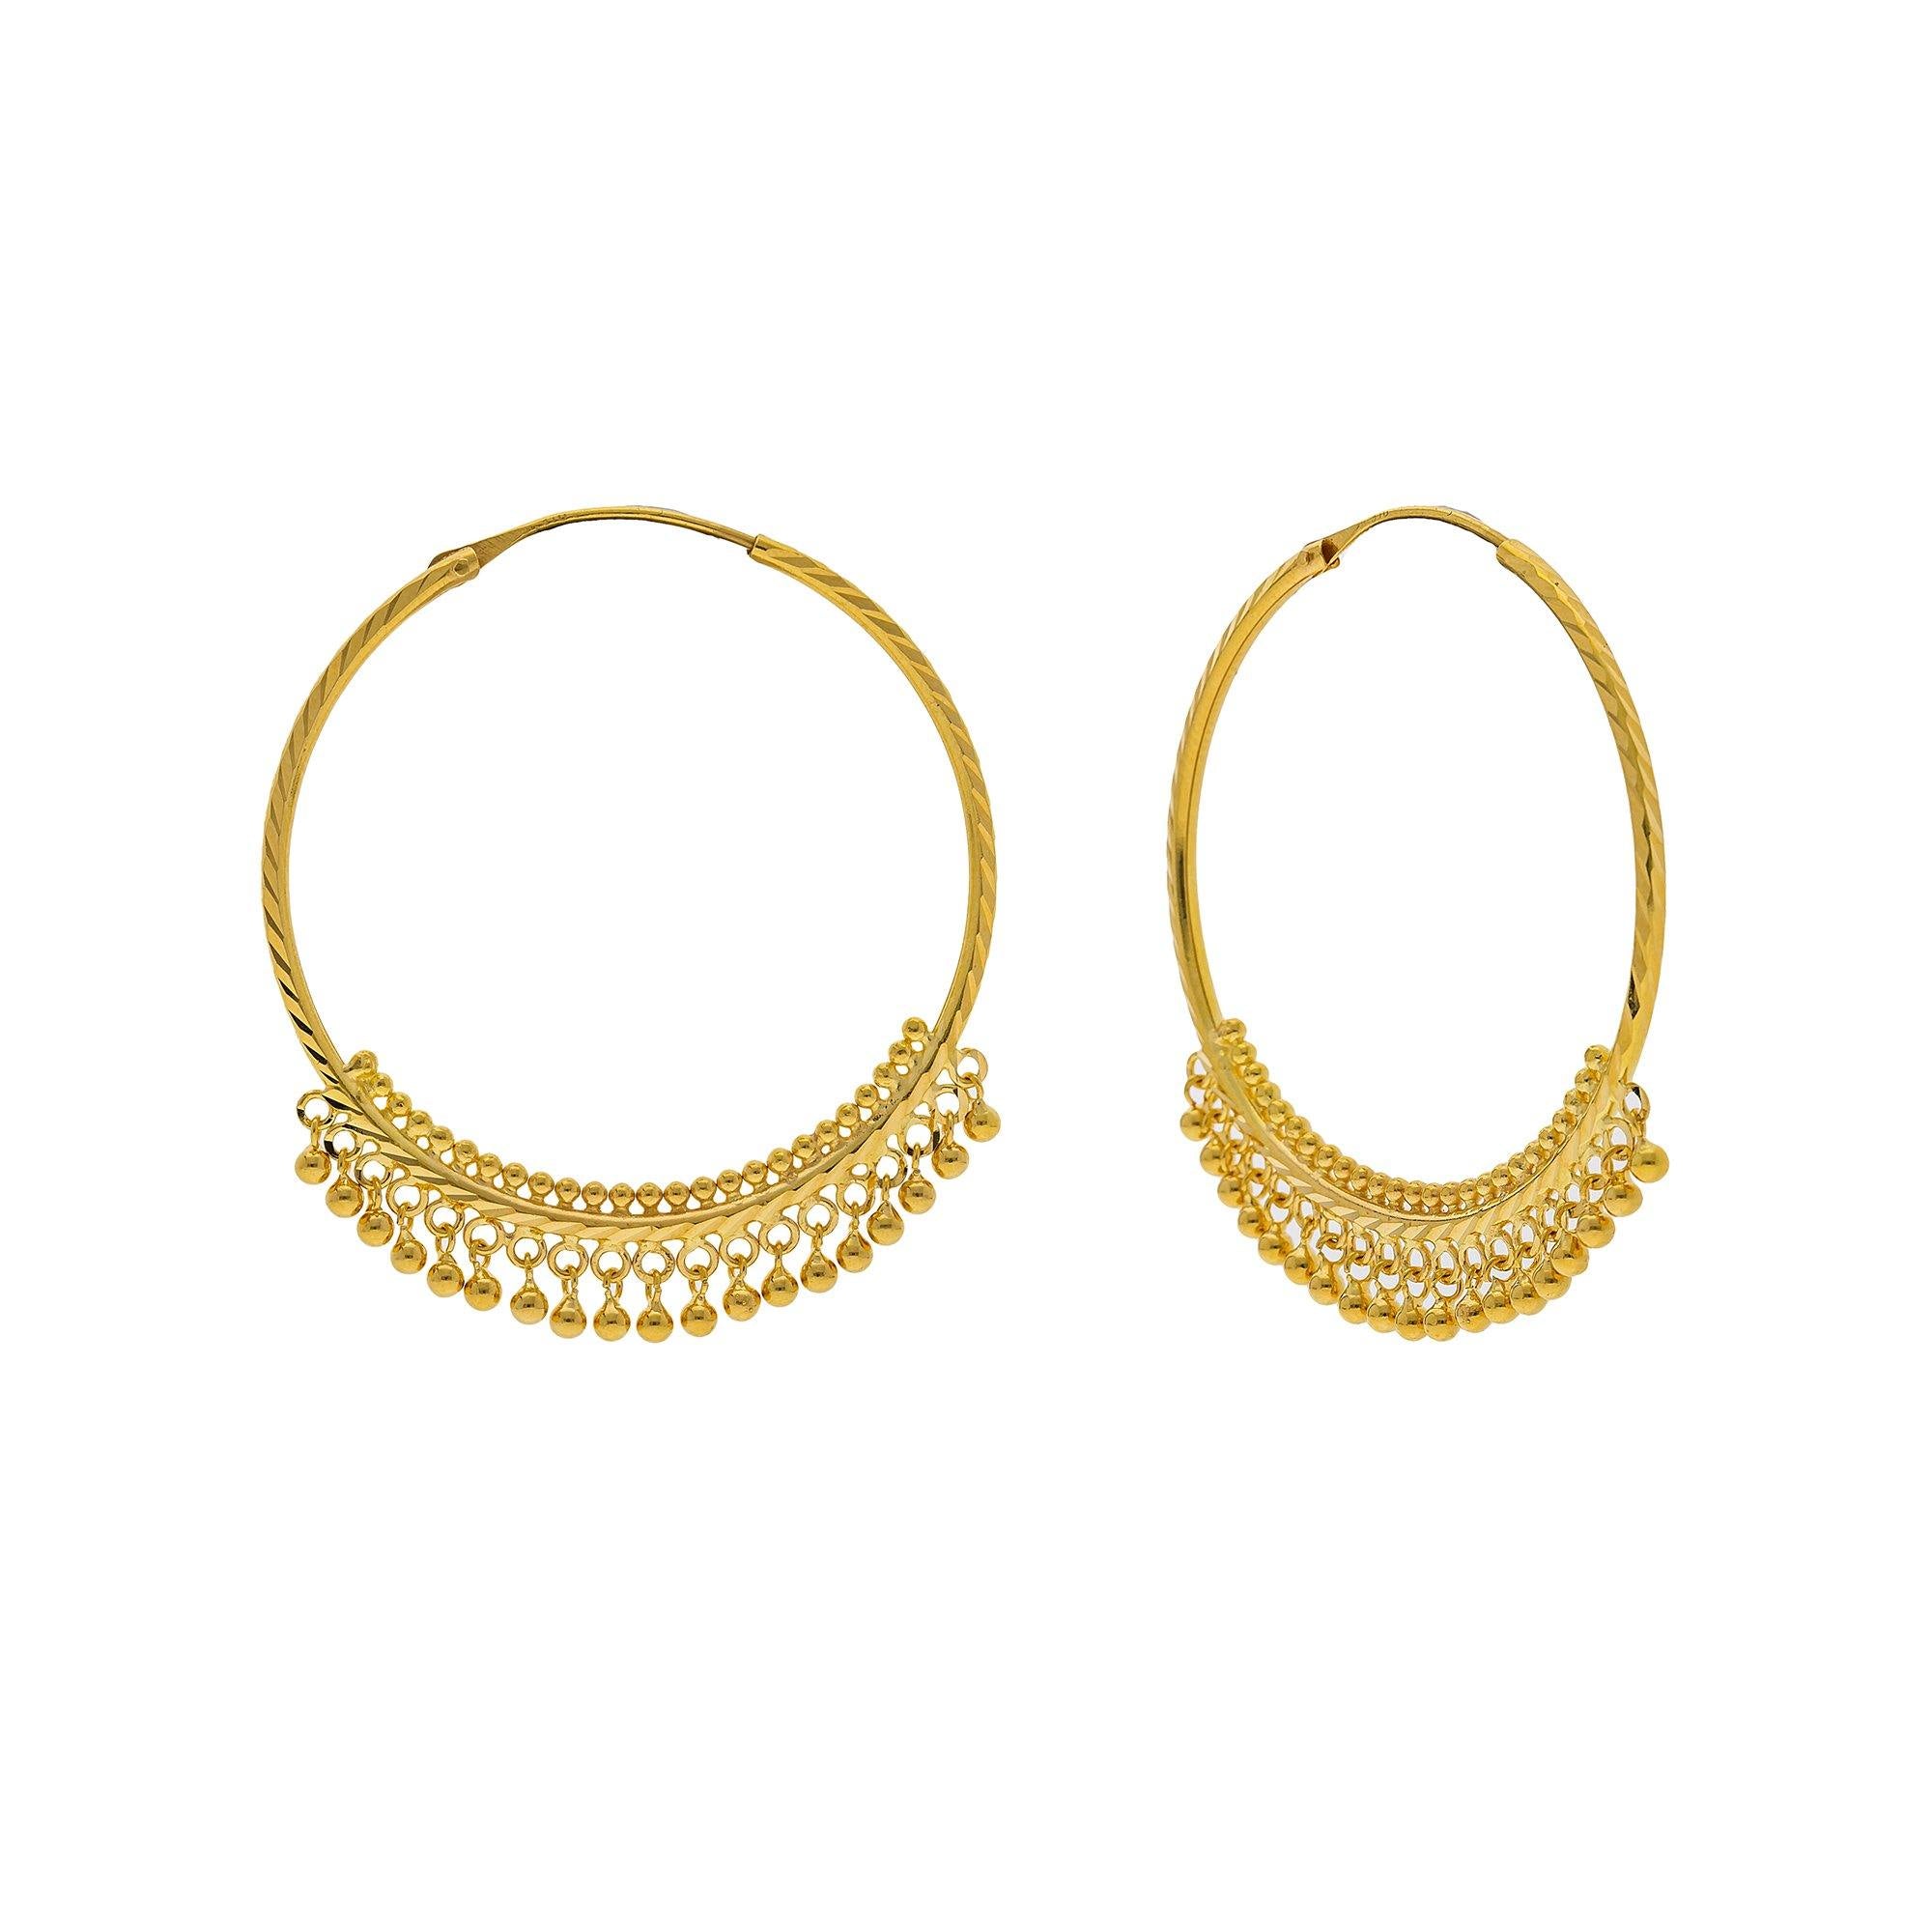 22K Yellow Gold Hoop Earrings W/ Hanging Gold Balls Underlining